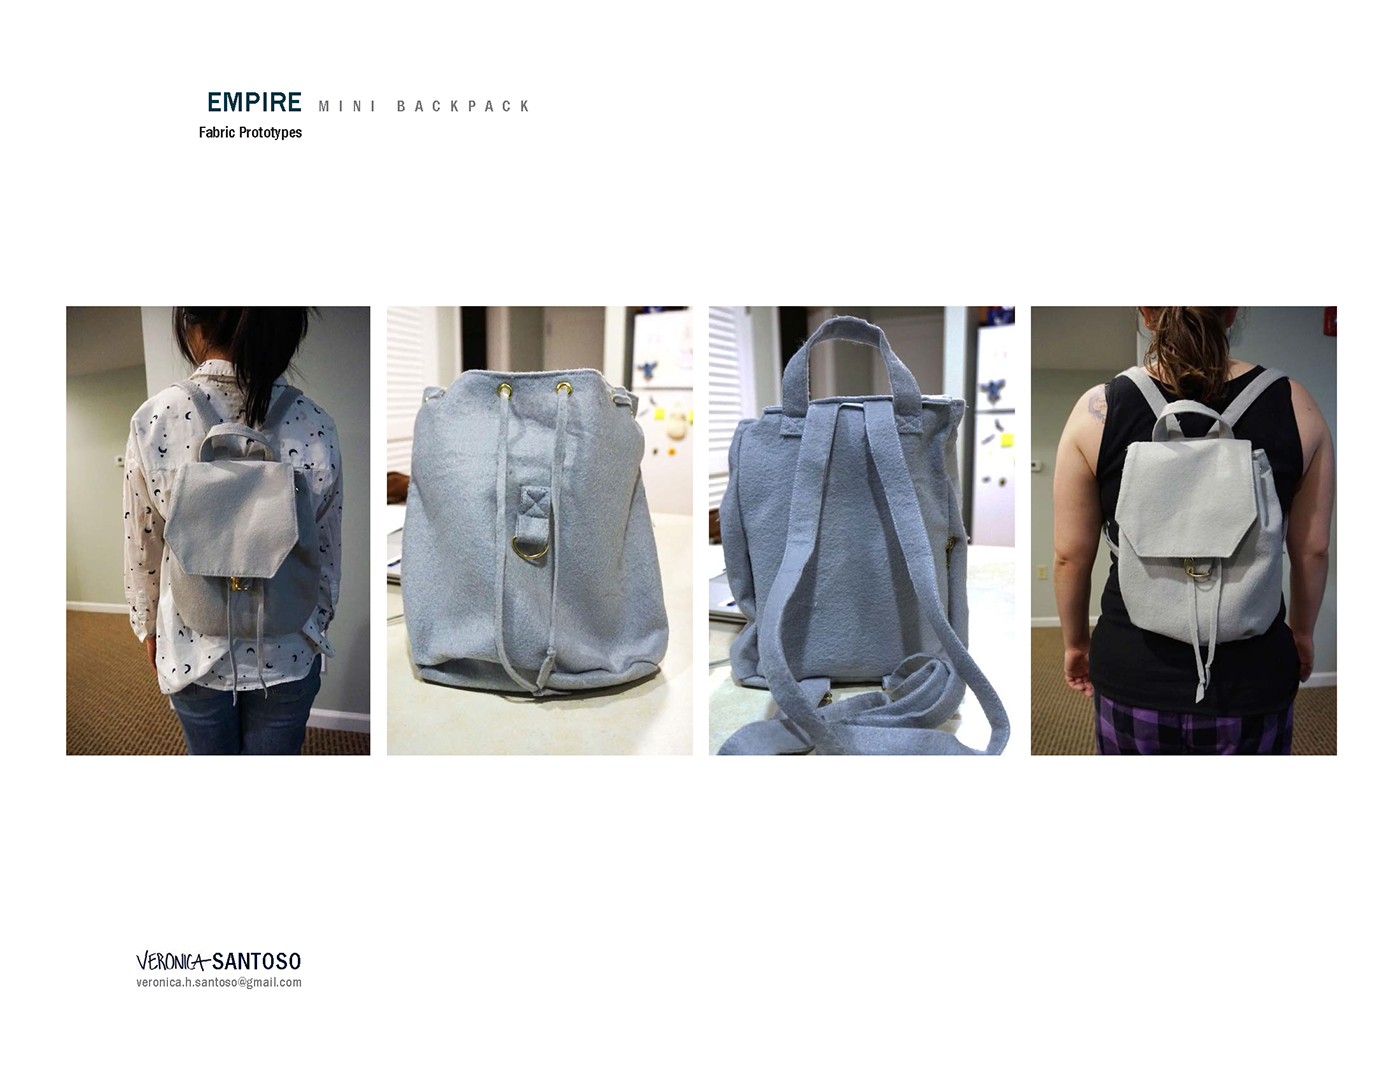 bag backpack softgood design product industrial felt sewing pockets MINI straps